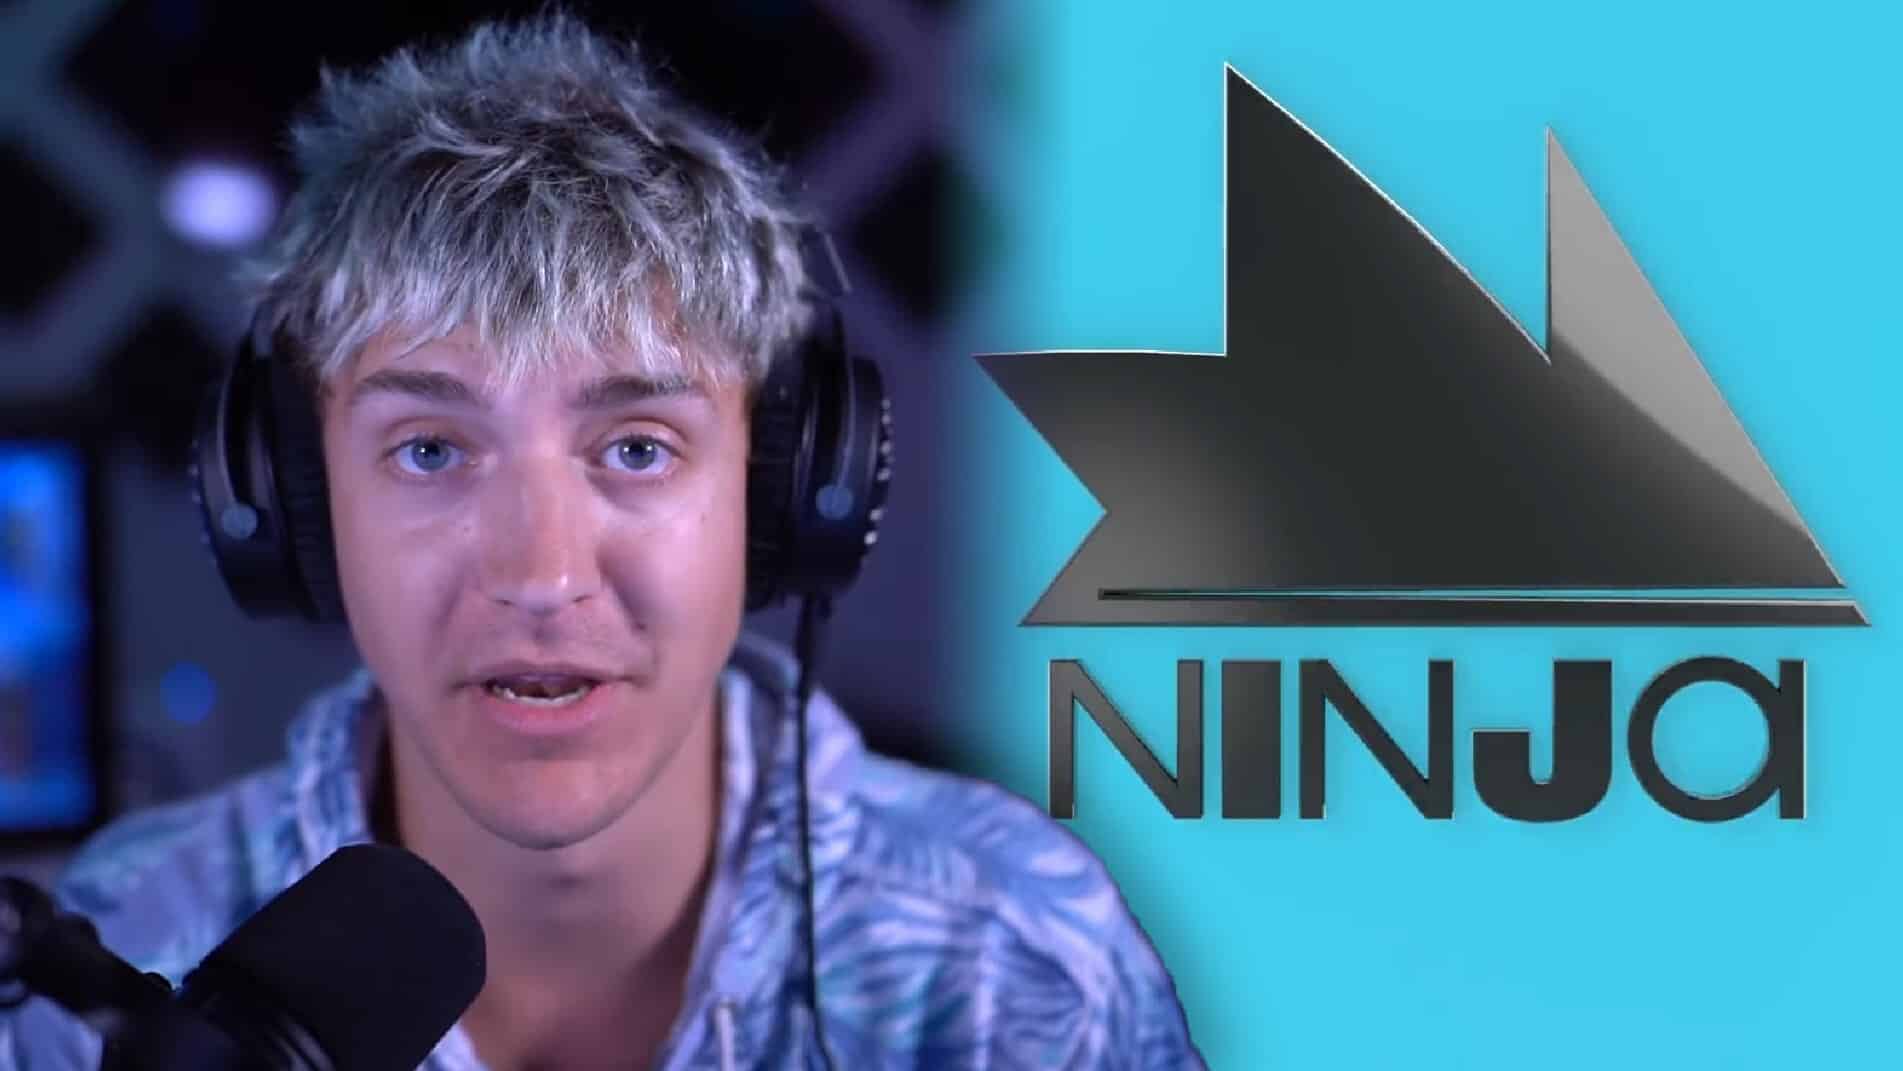 ninja new logo